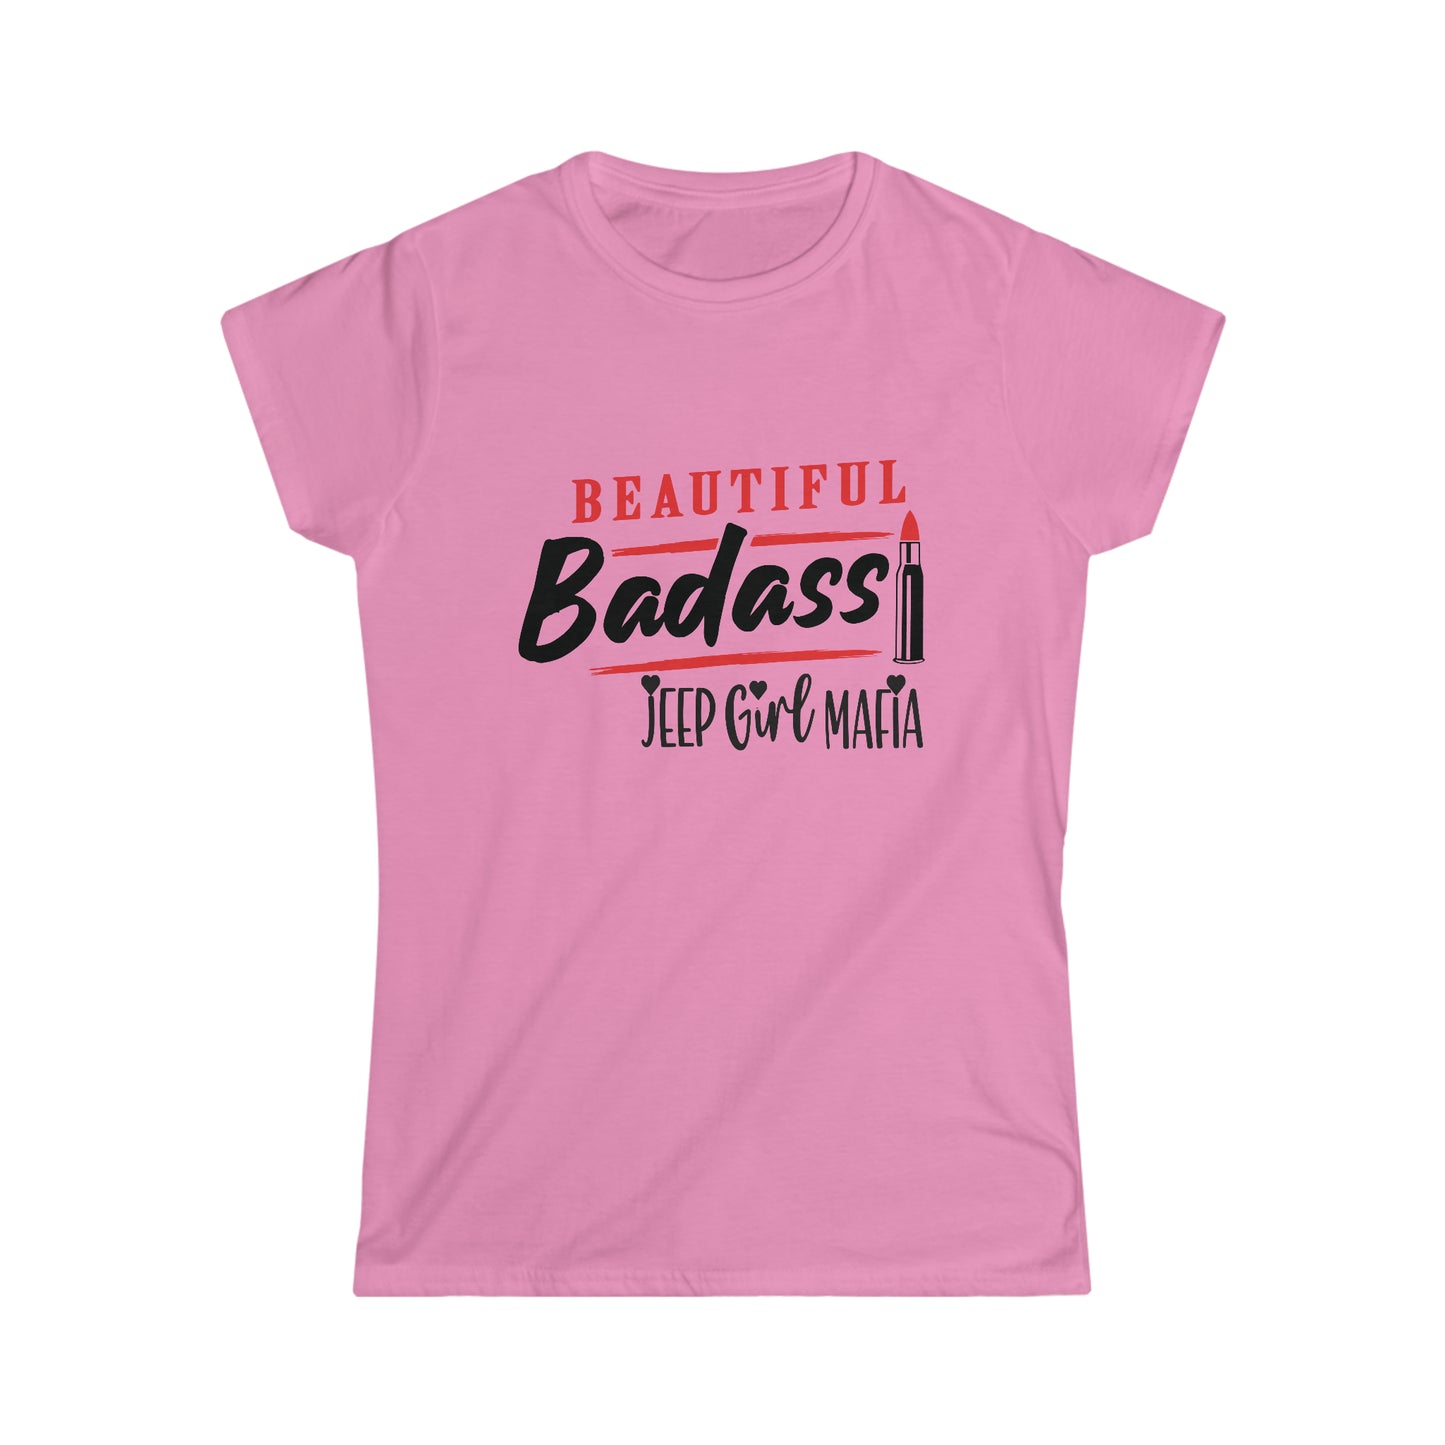 Beautiful Badass - Women's Softstyle Tee